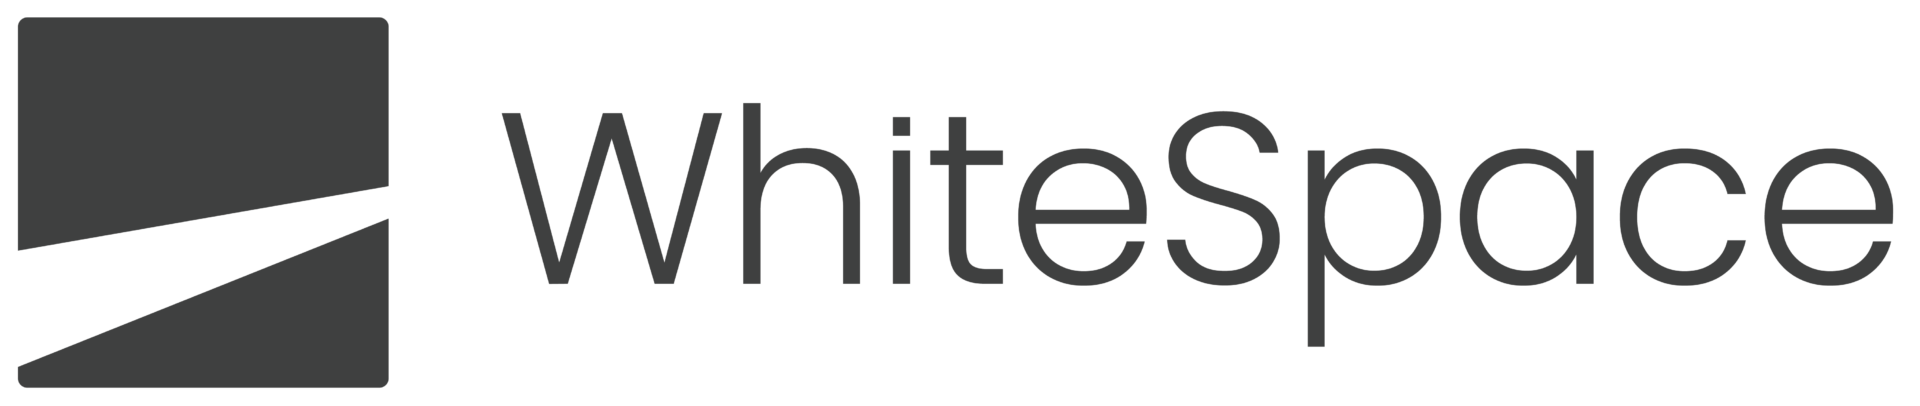 white space horizontal logo PNG